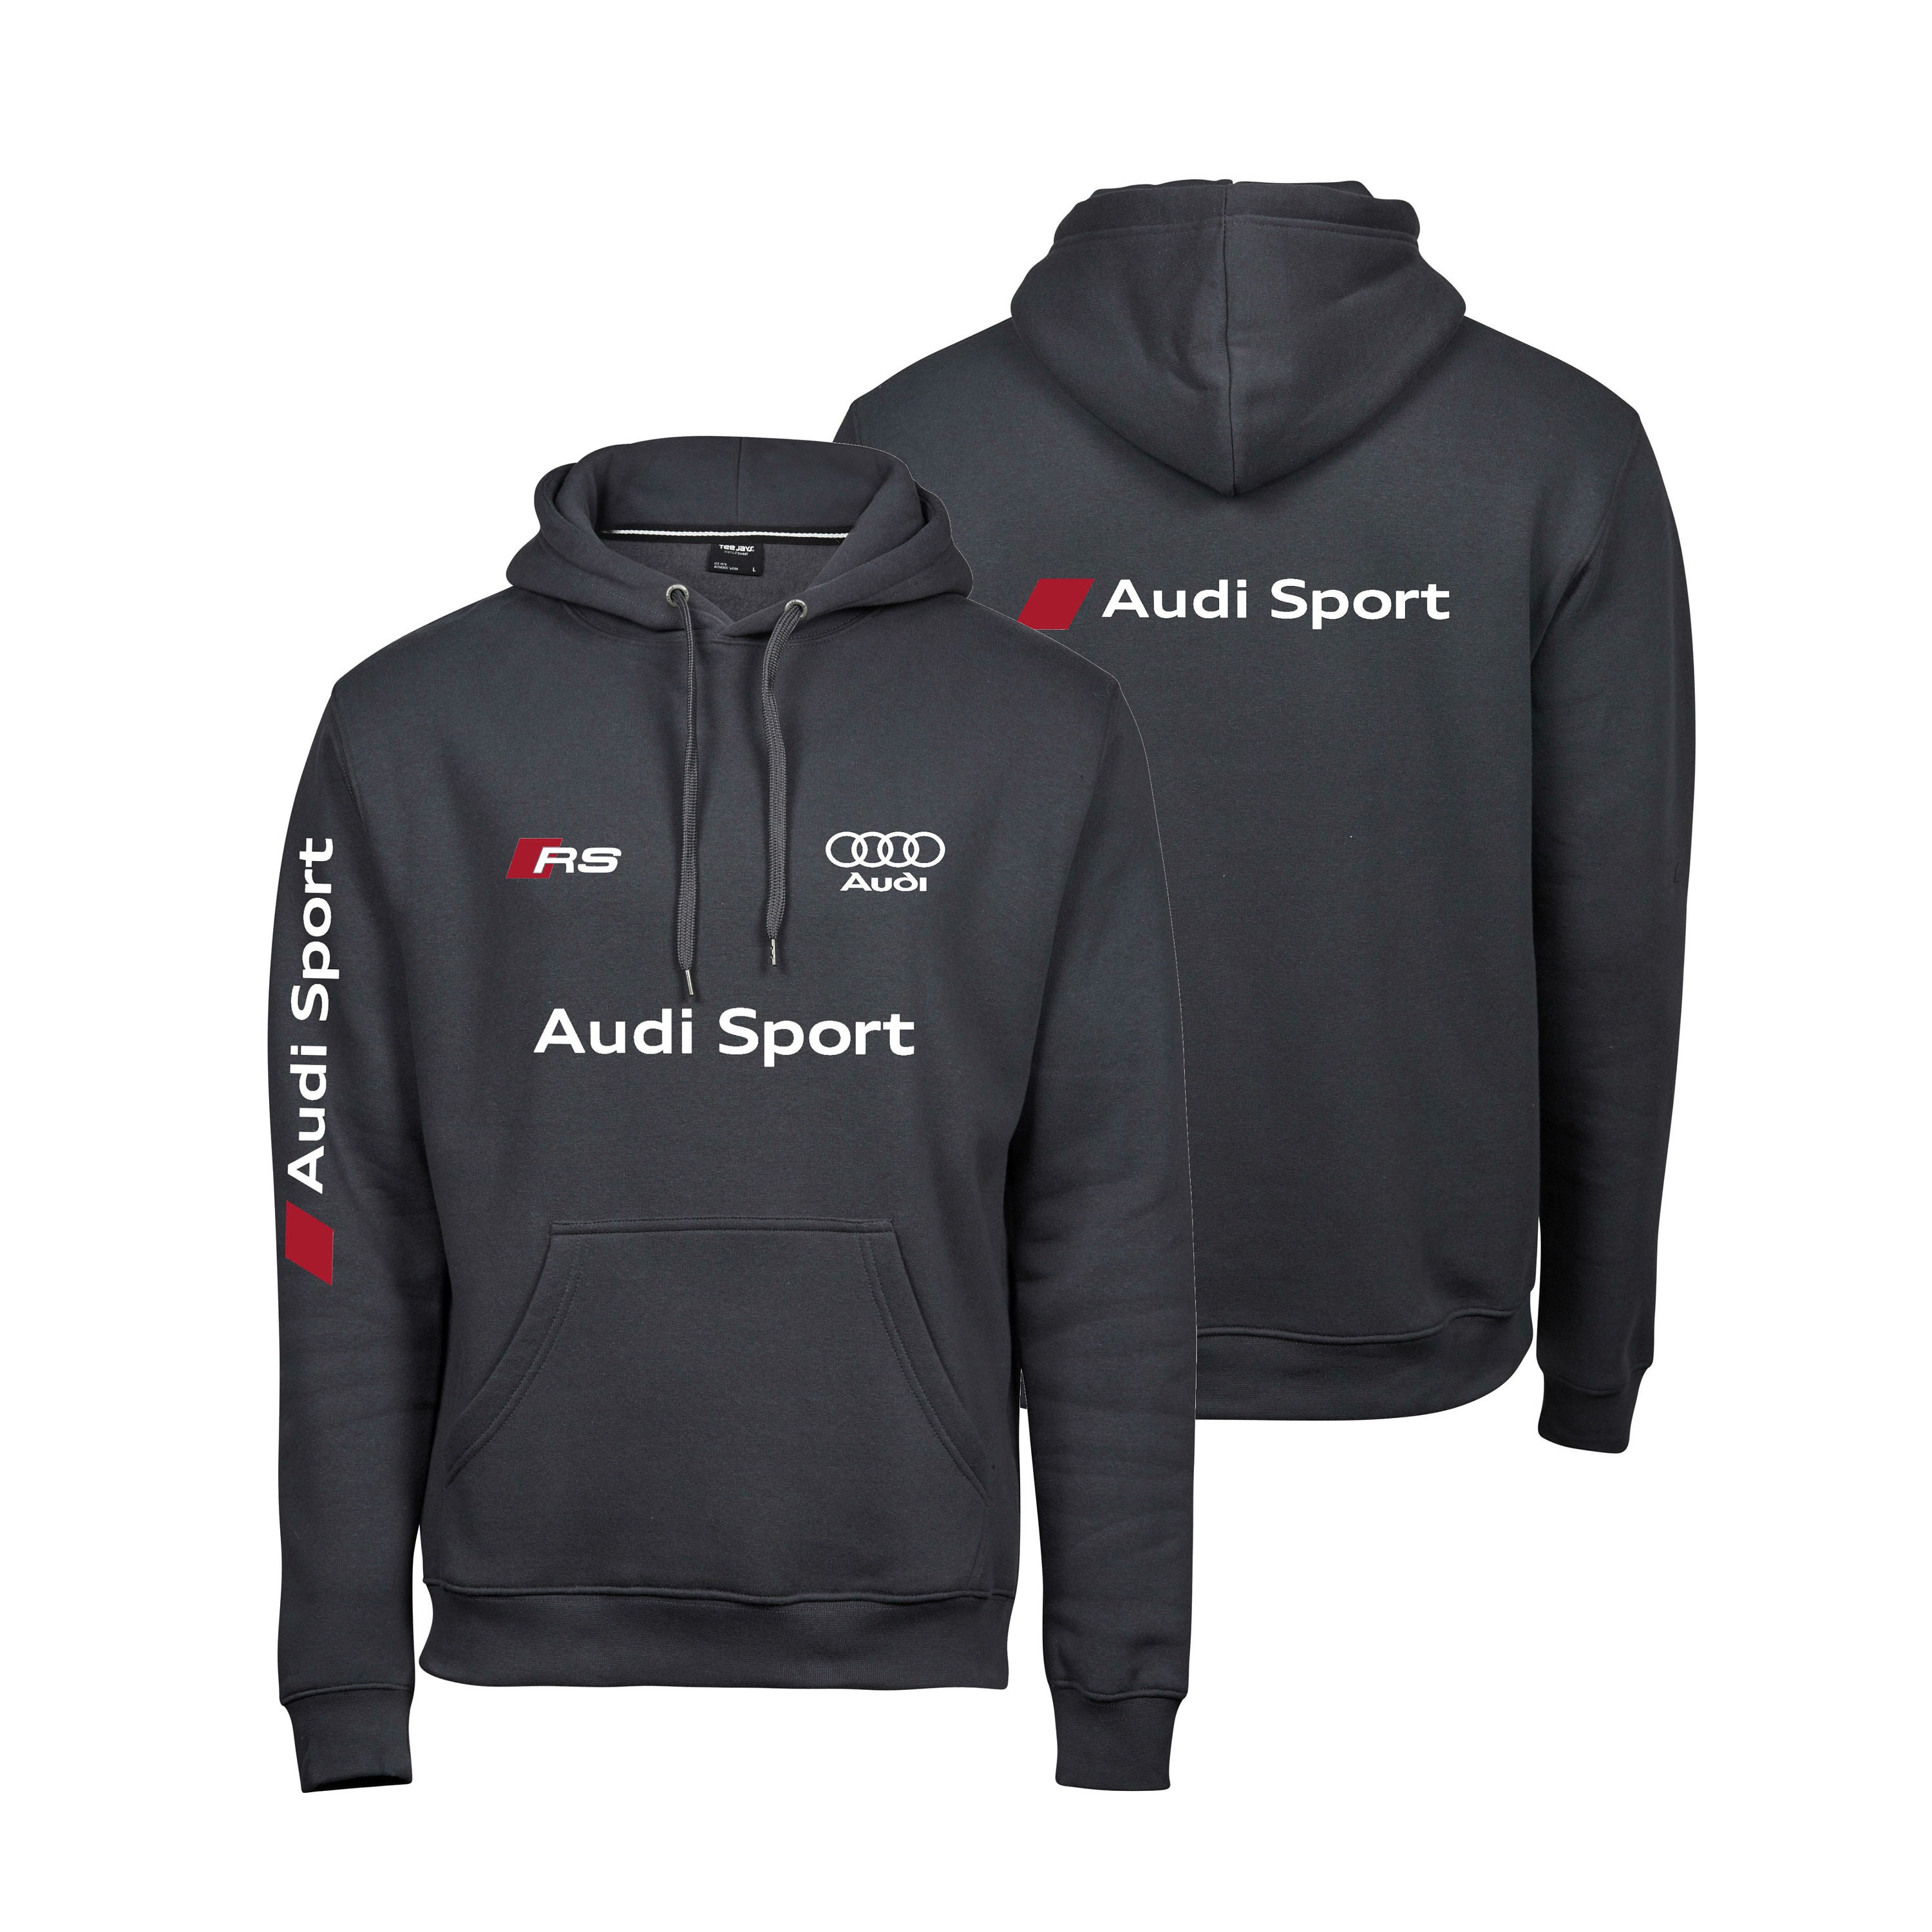 Audi sport sudadera Etsy